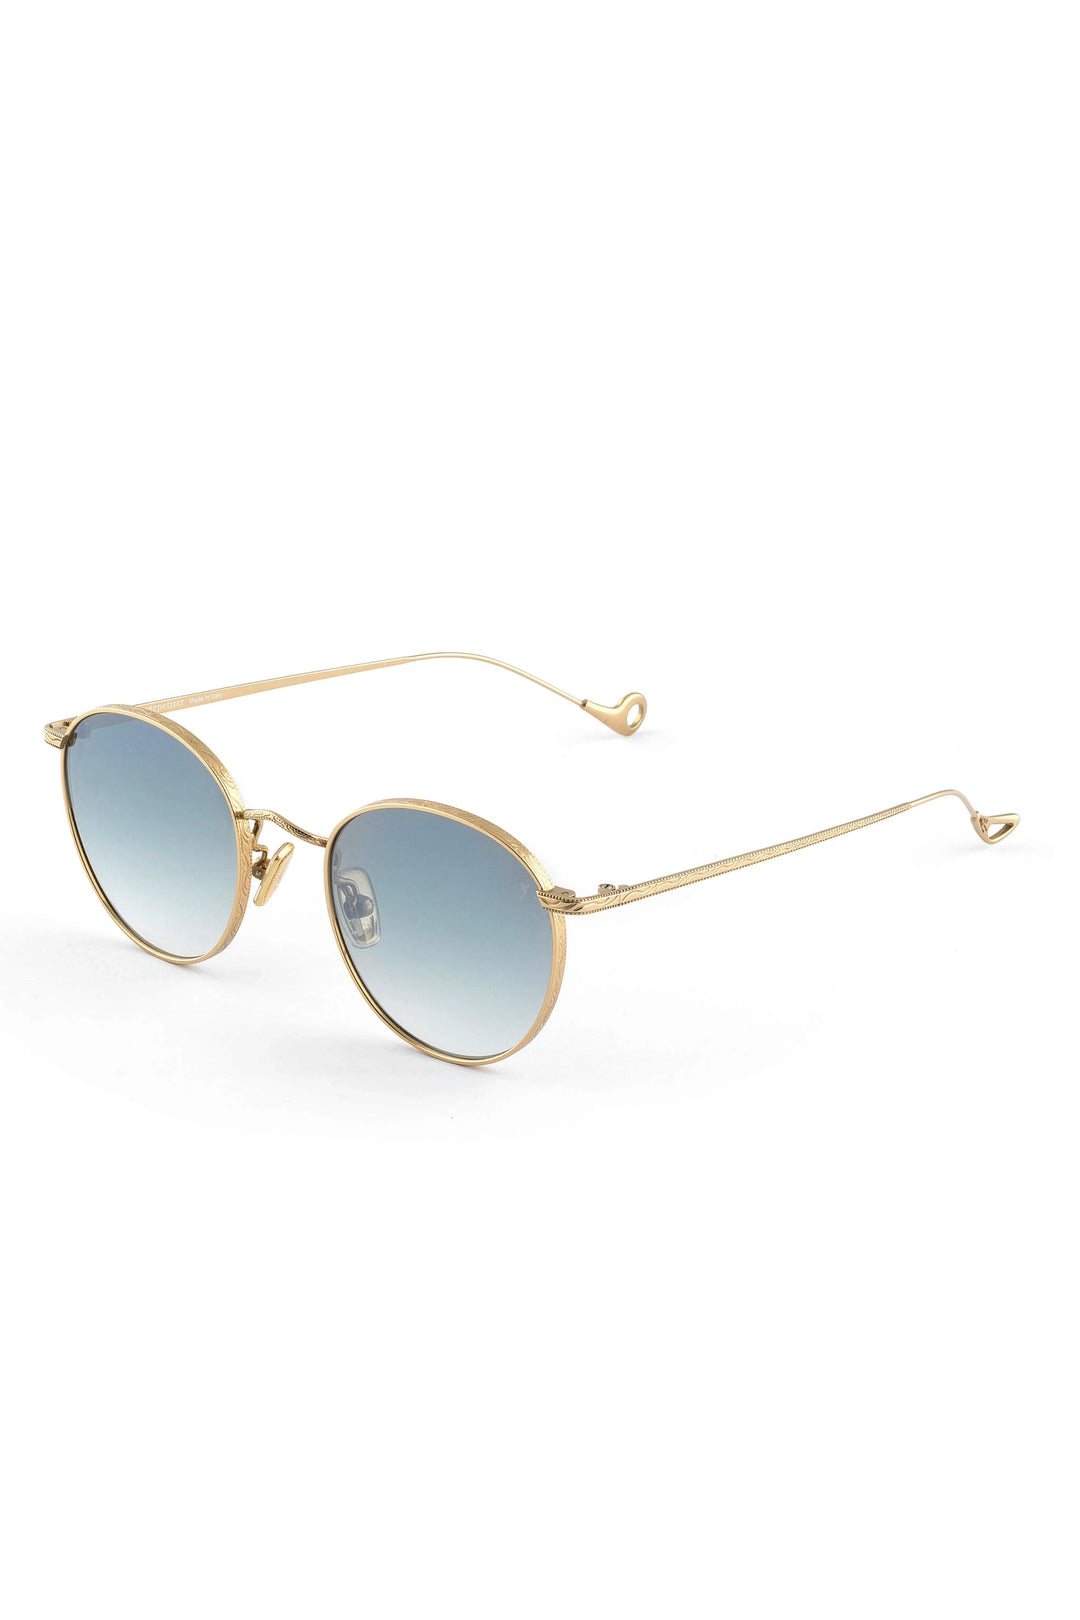 Jockey Sunglasses - Gold / Green Gradient